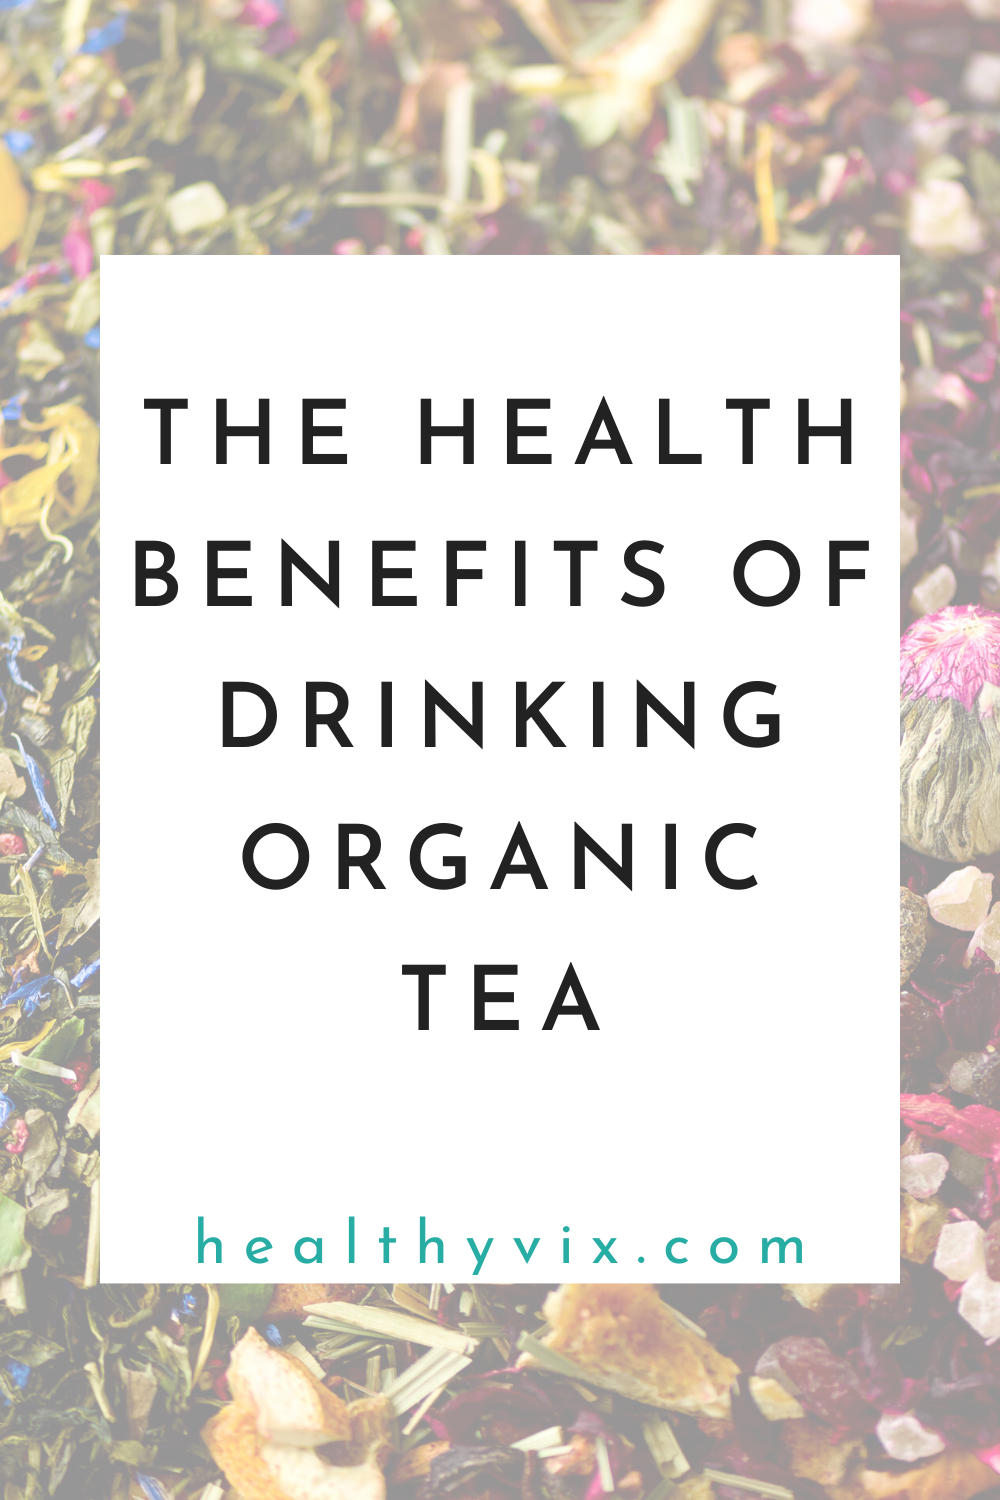 The health benefits of drinking organic tea